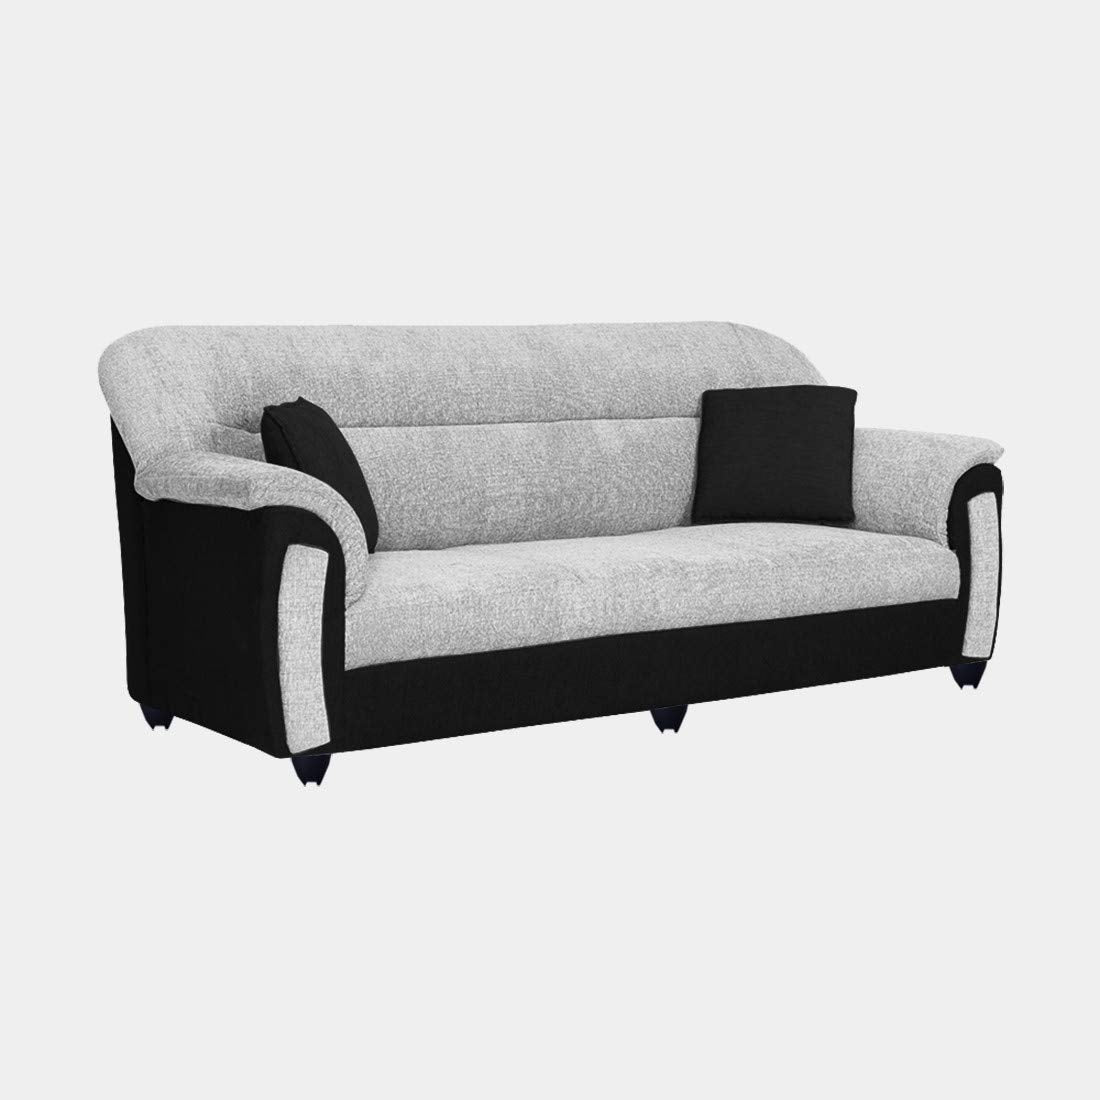 Ruben 3 Seater Fabric Sofa For Living Room - Torque India